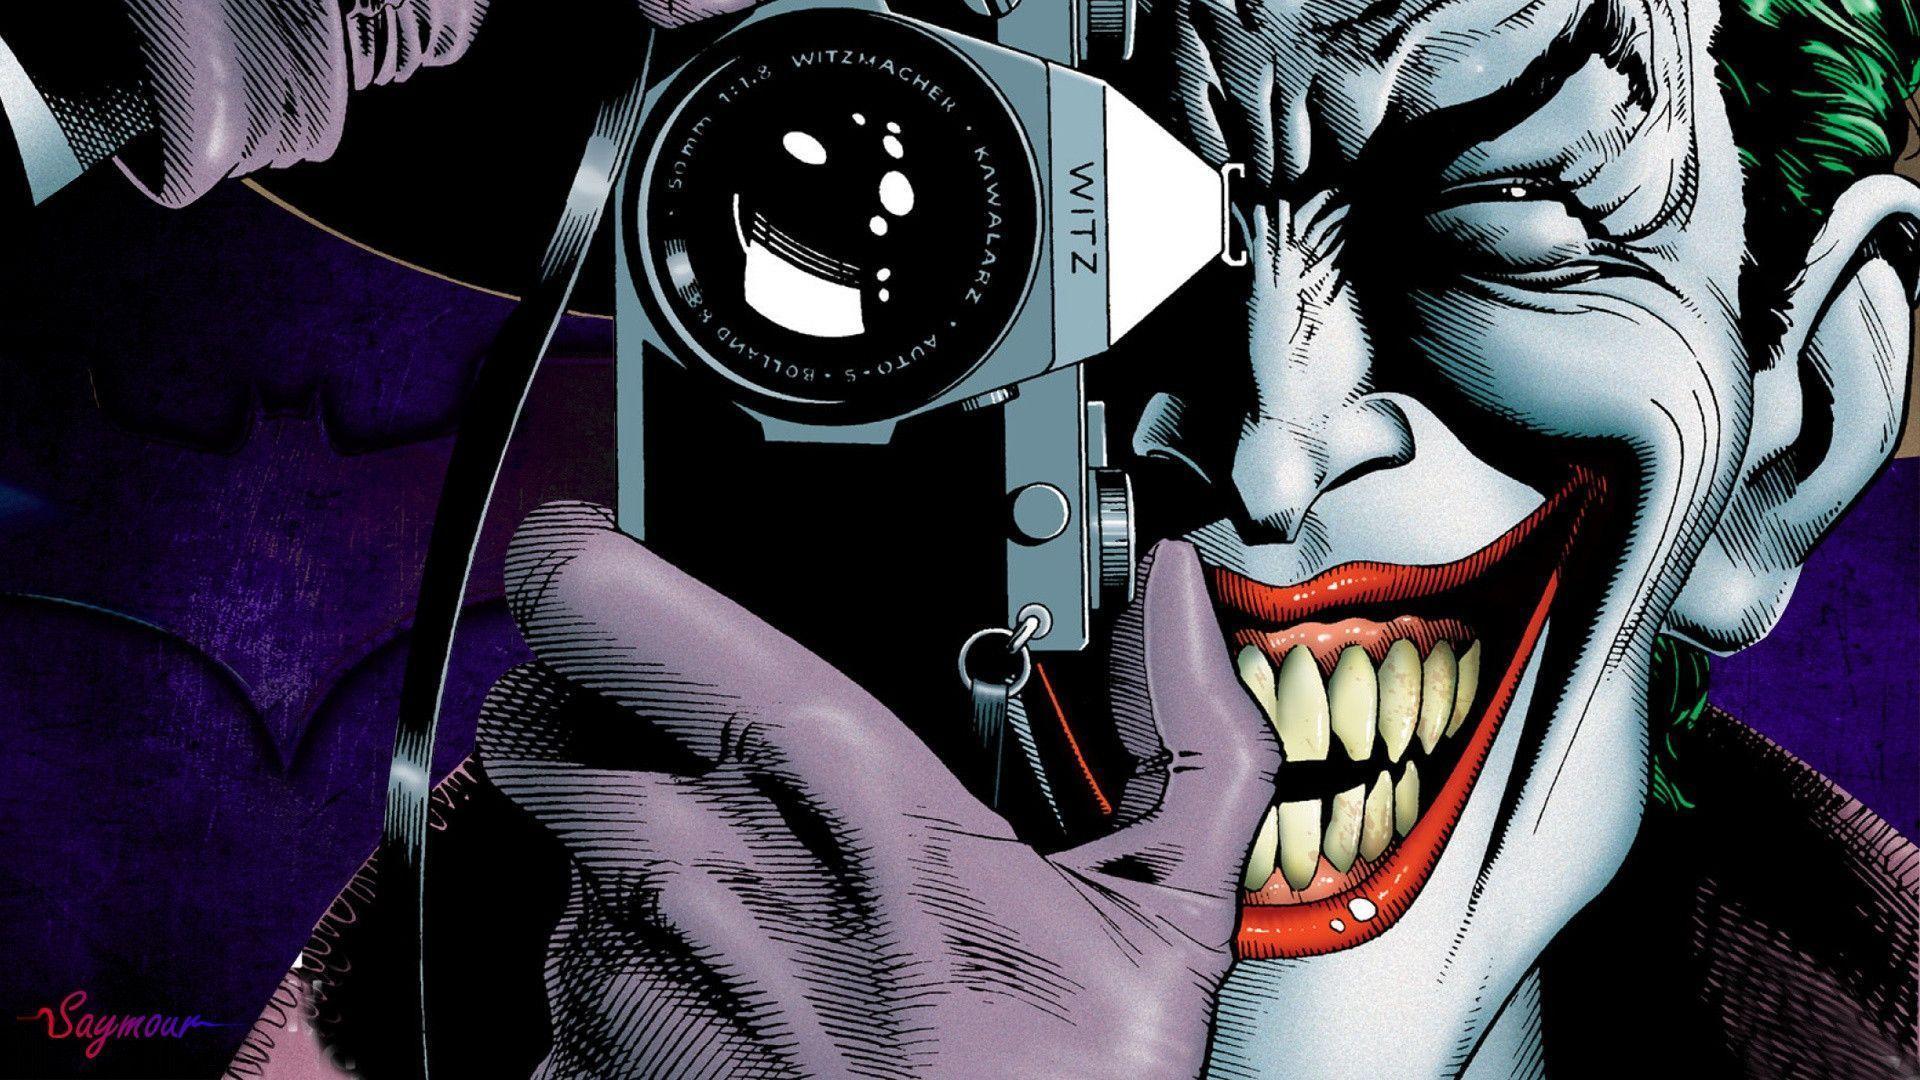 Joker Cartoon Artwork Wallpapers